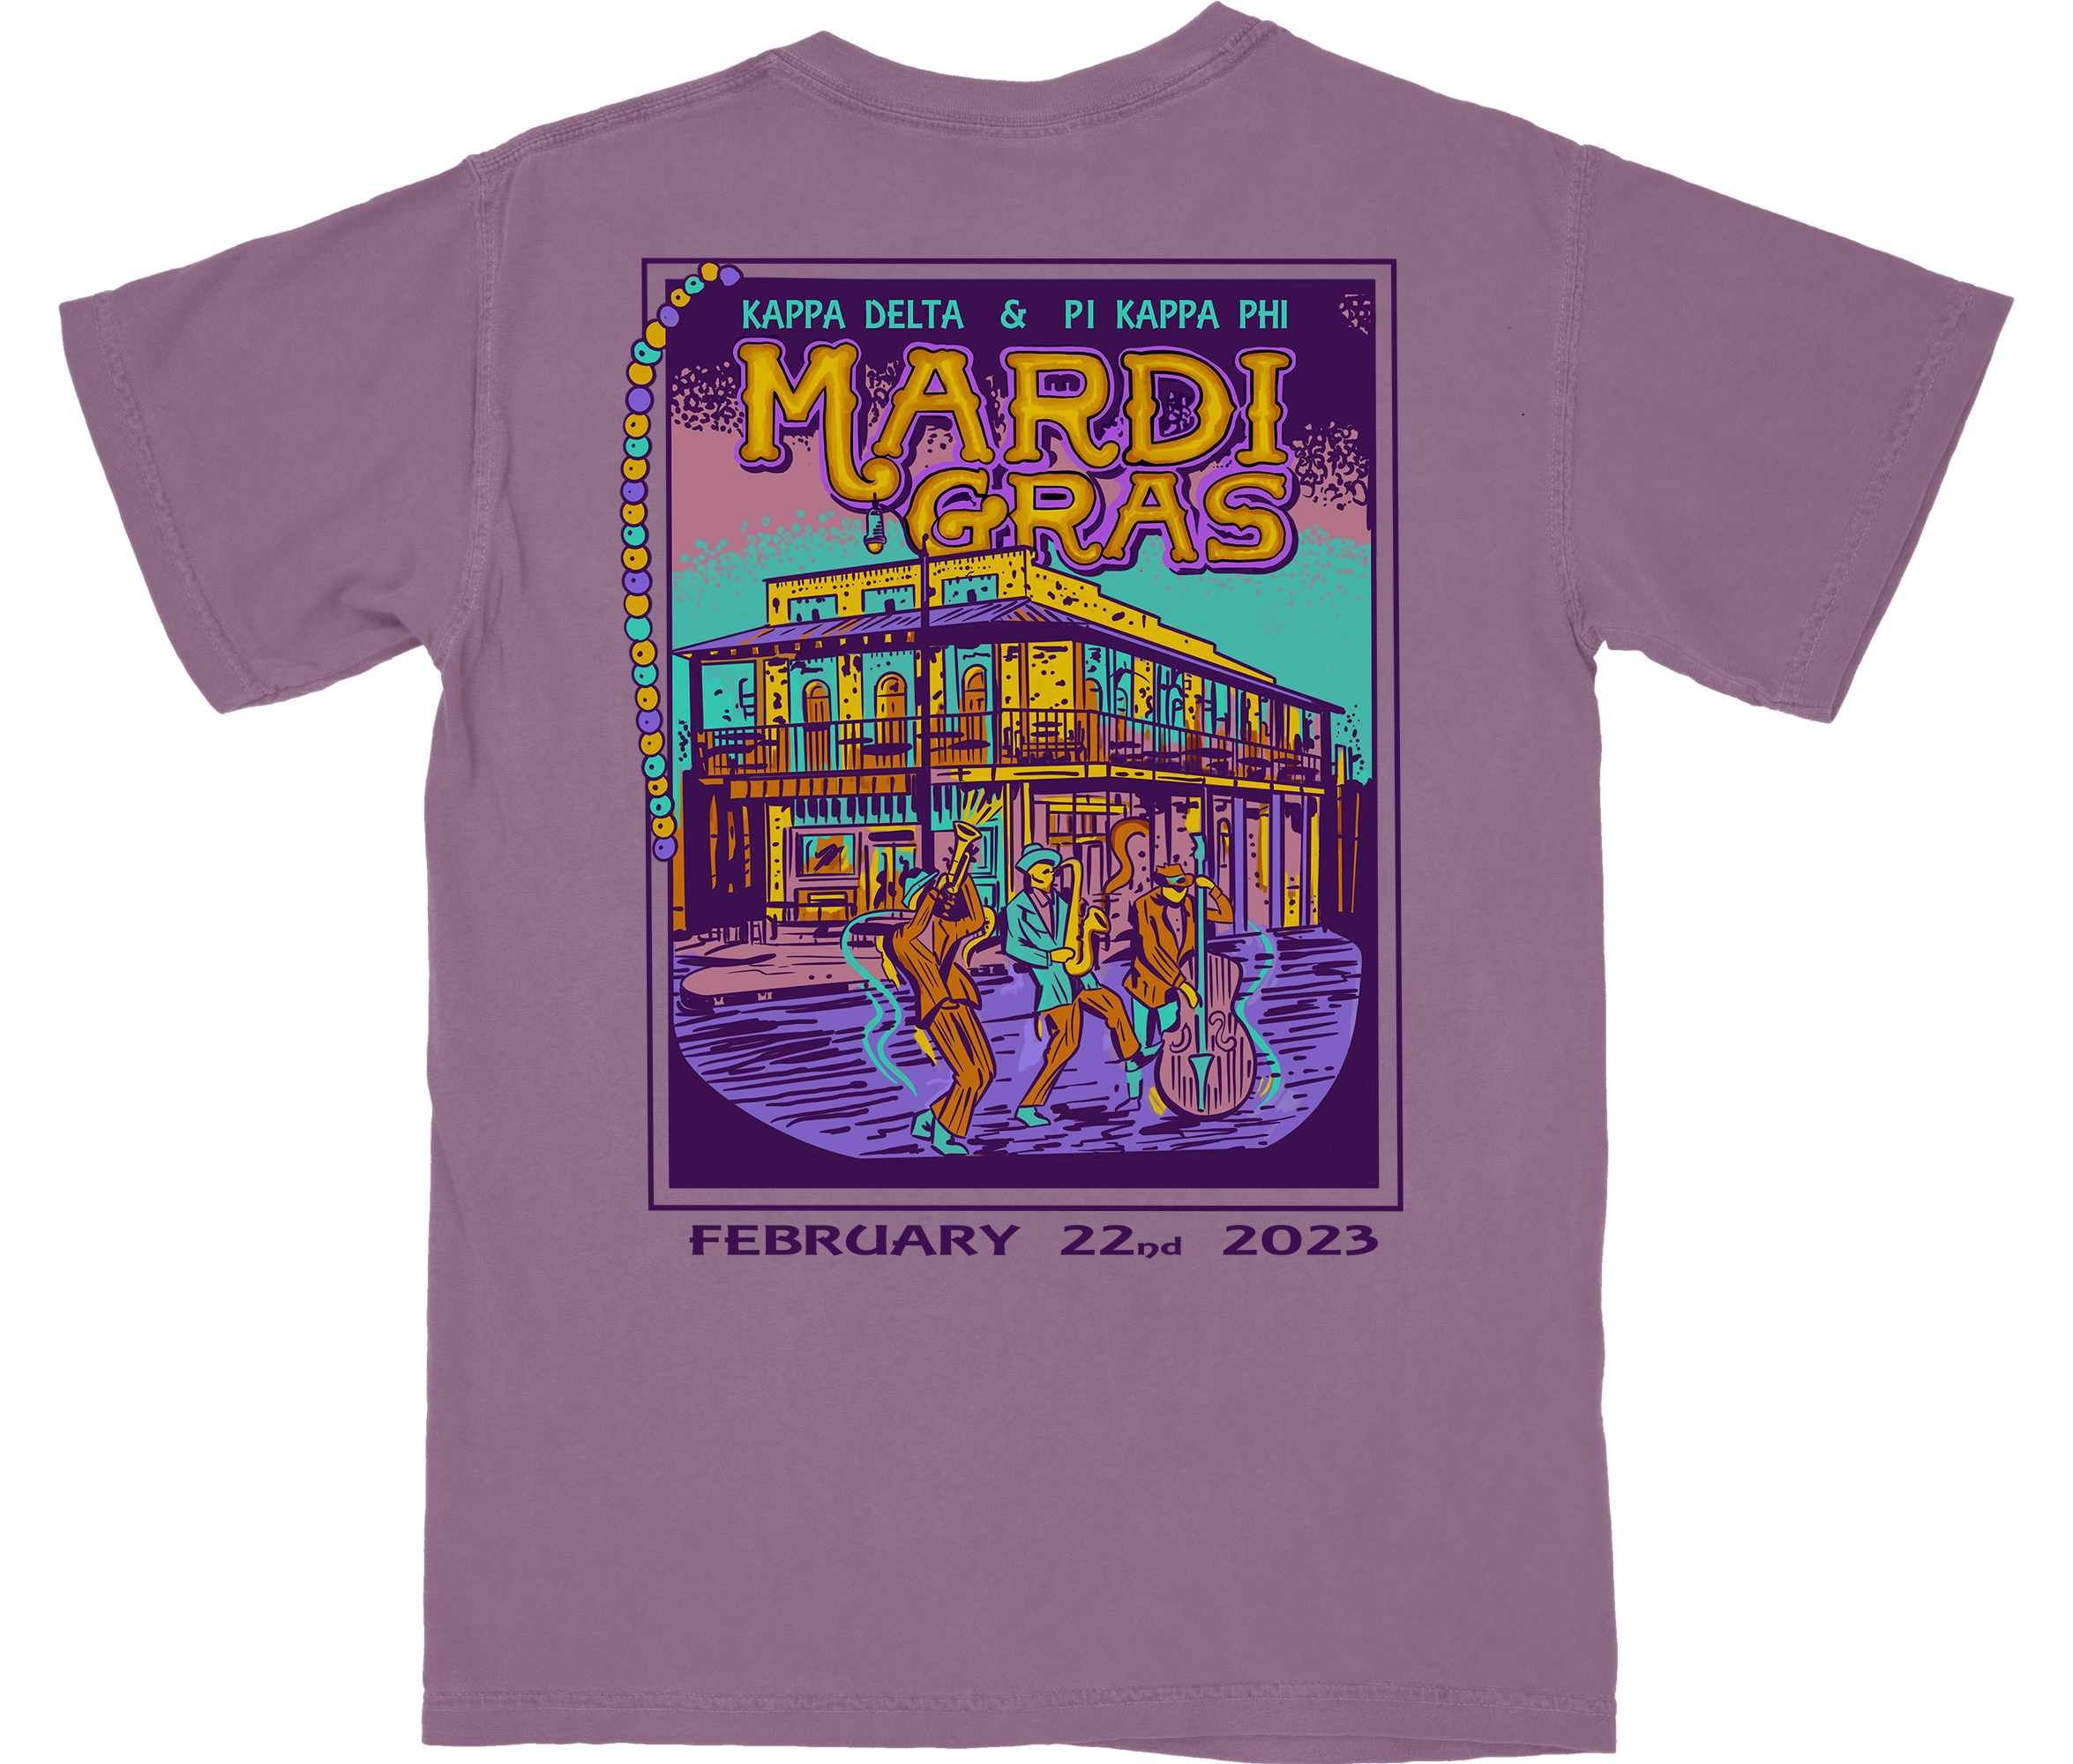 Pi Kappa Phi Mardi Gras Social Shirt